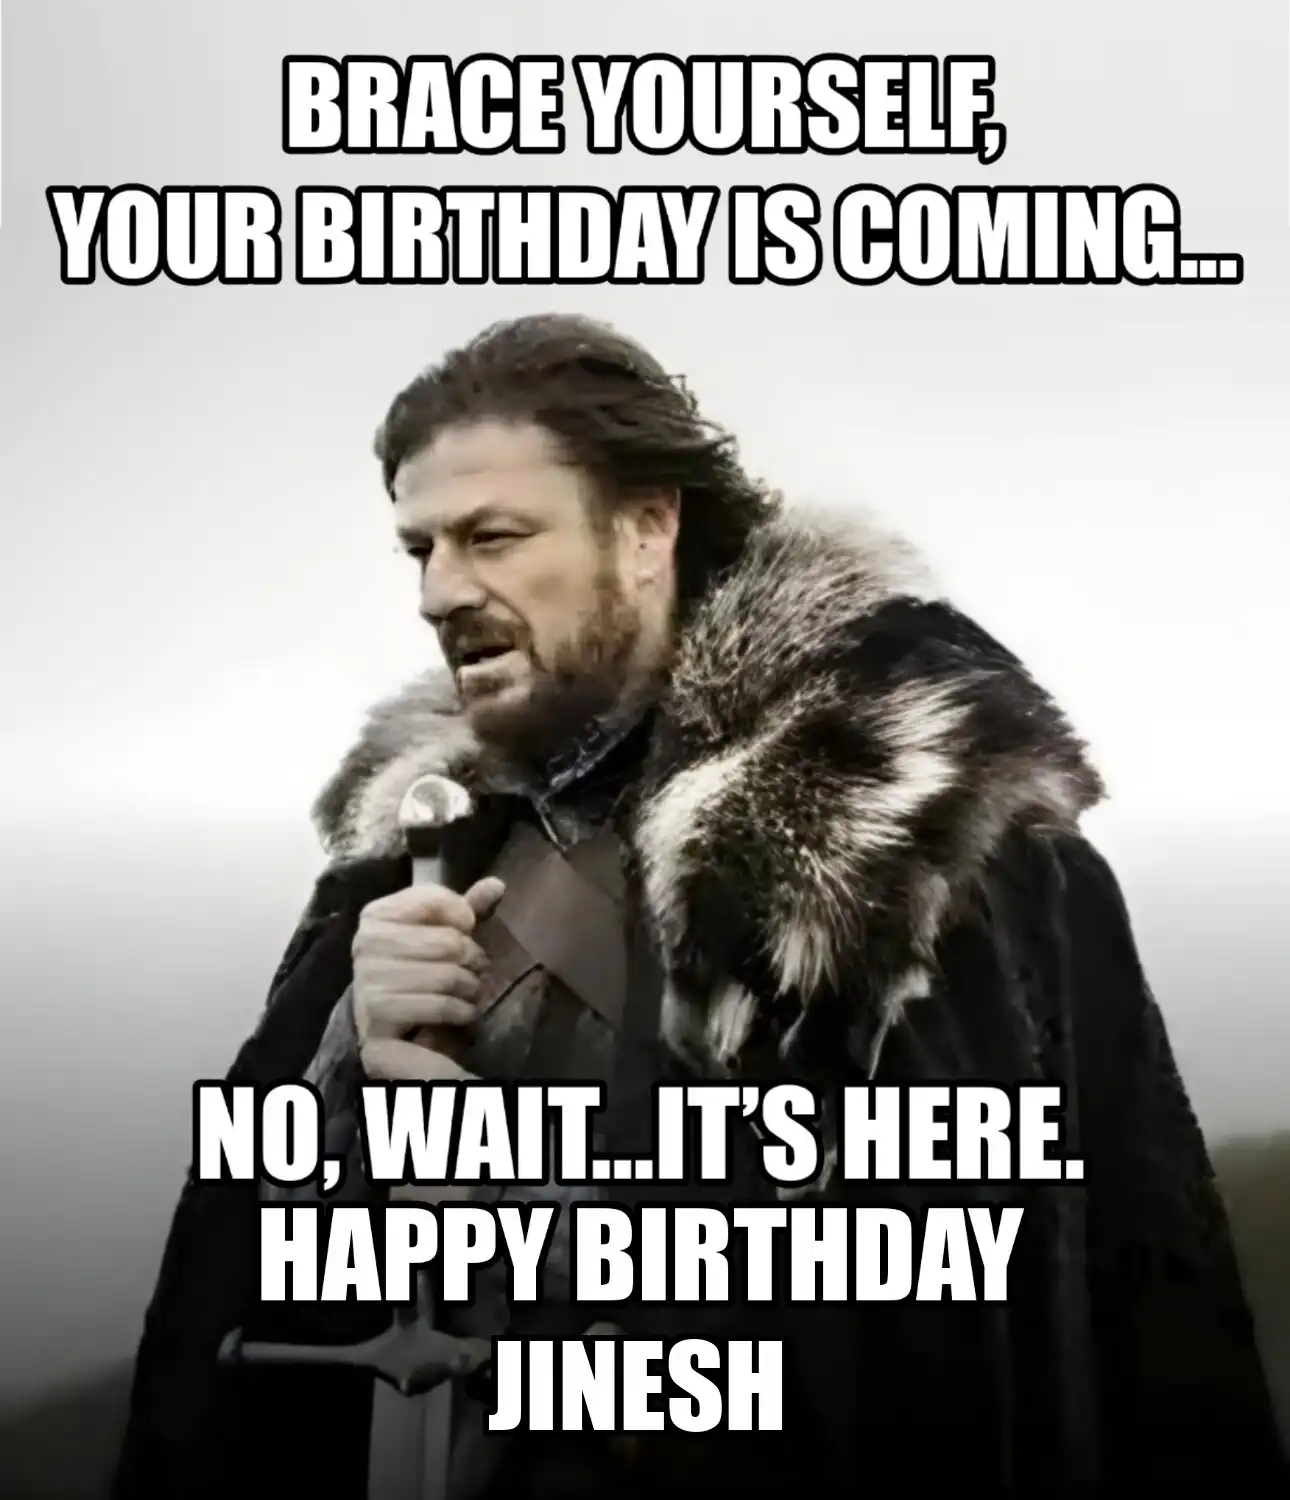 Happy Birthday Jinesh Brace Yourself Your Birthday Is Coming Meme